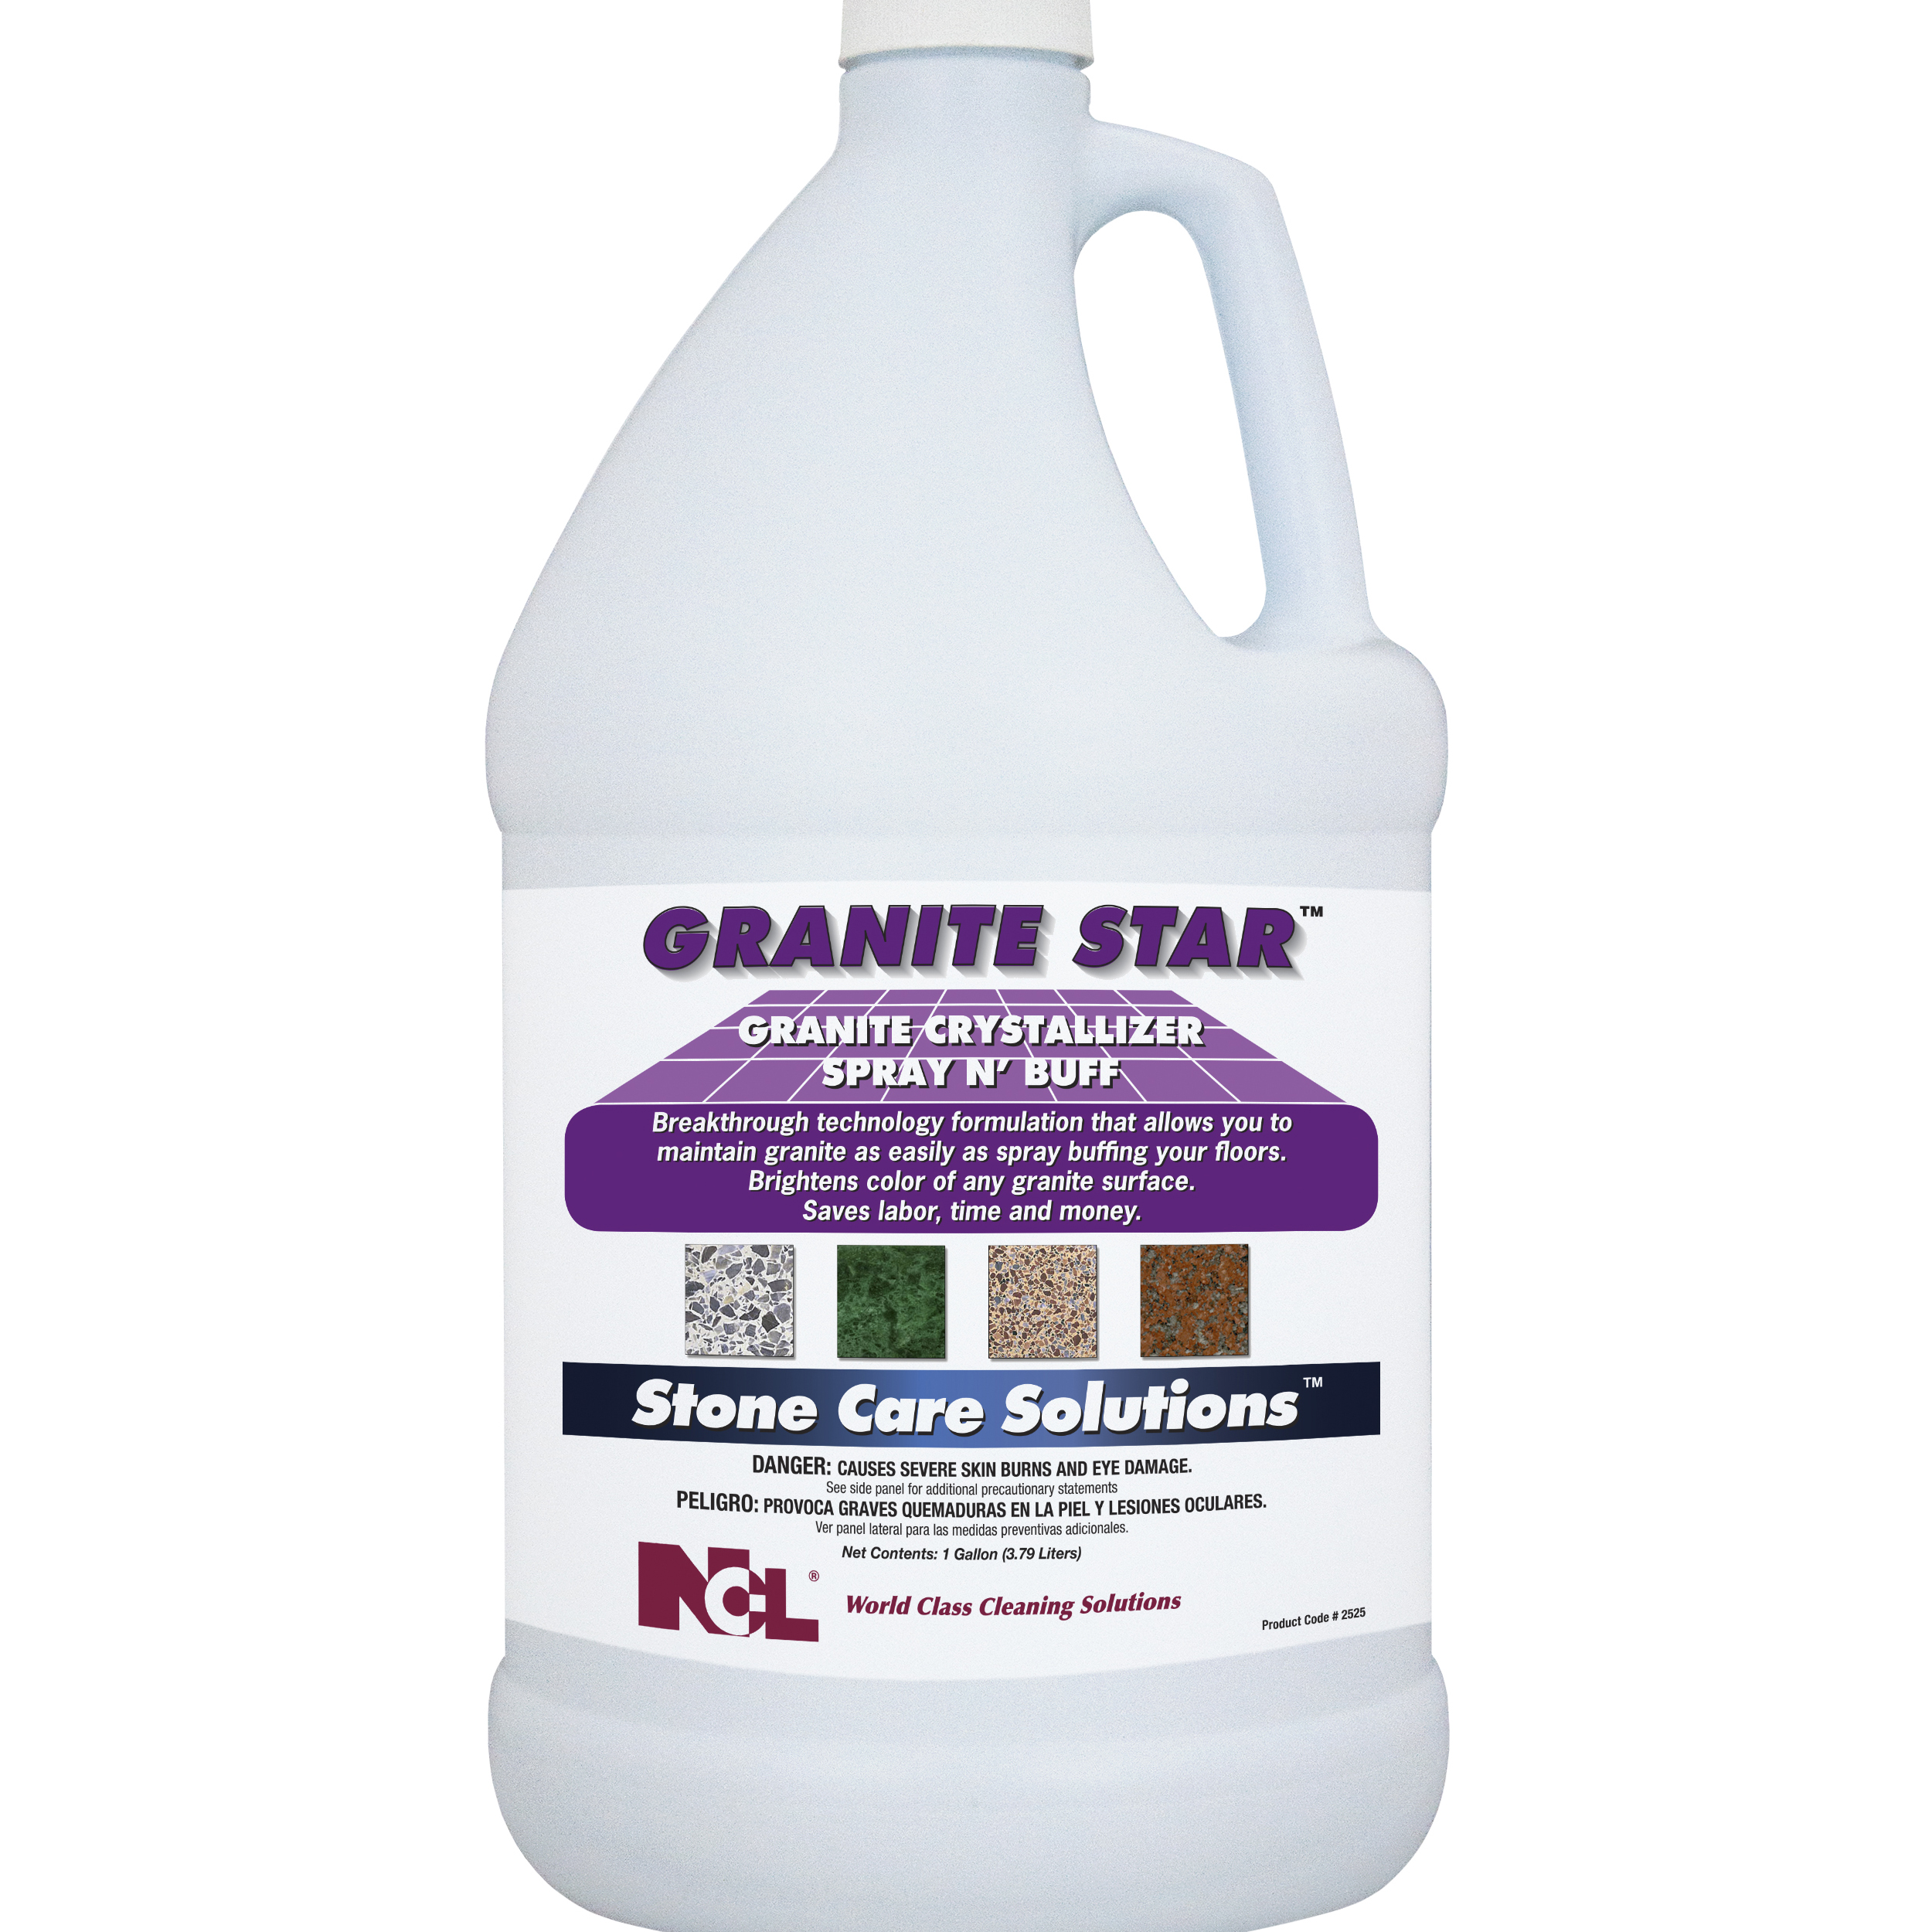  GRANITE STAR Spray N' Buff Crystallizer 4/1 Gal. Case (NCL2525-29) 